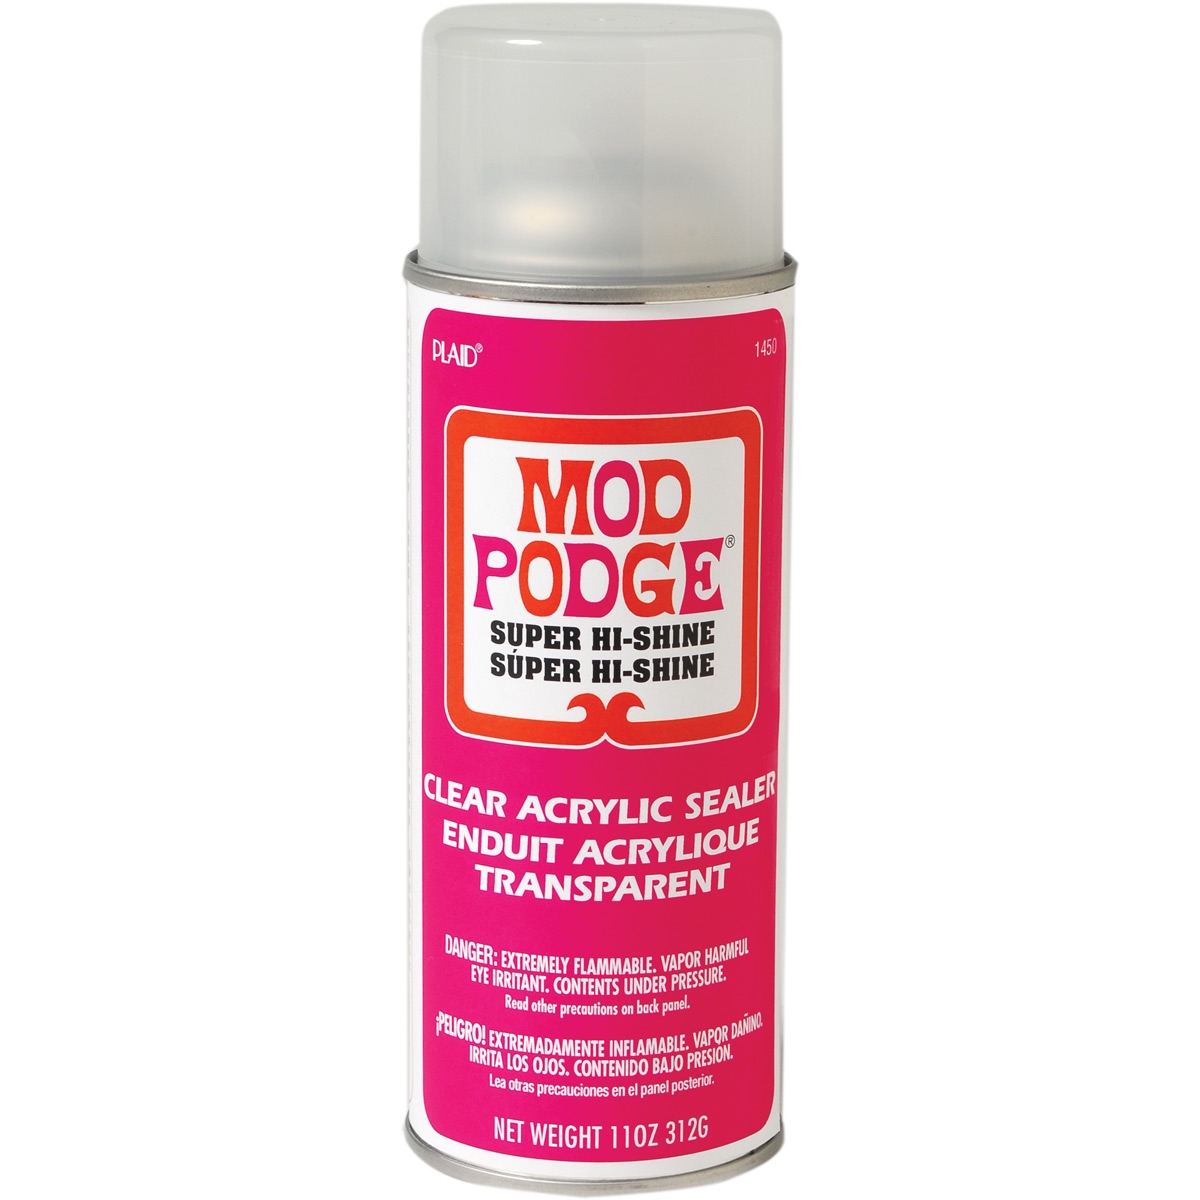 Shop Plaid Mod Podge ® Dishwasher Safe Gloss, 8 oz. - CS15059 - CS15059